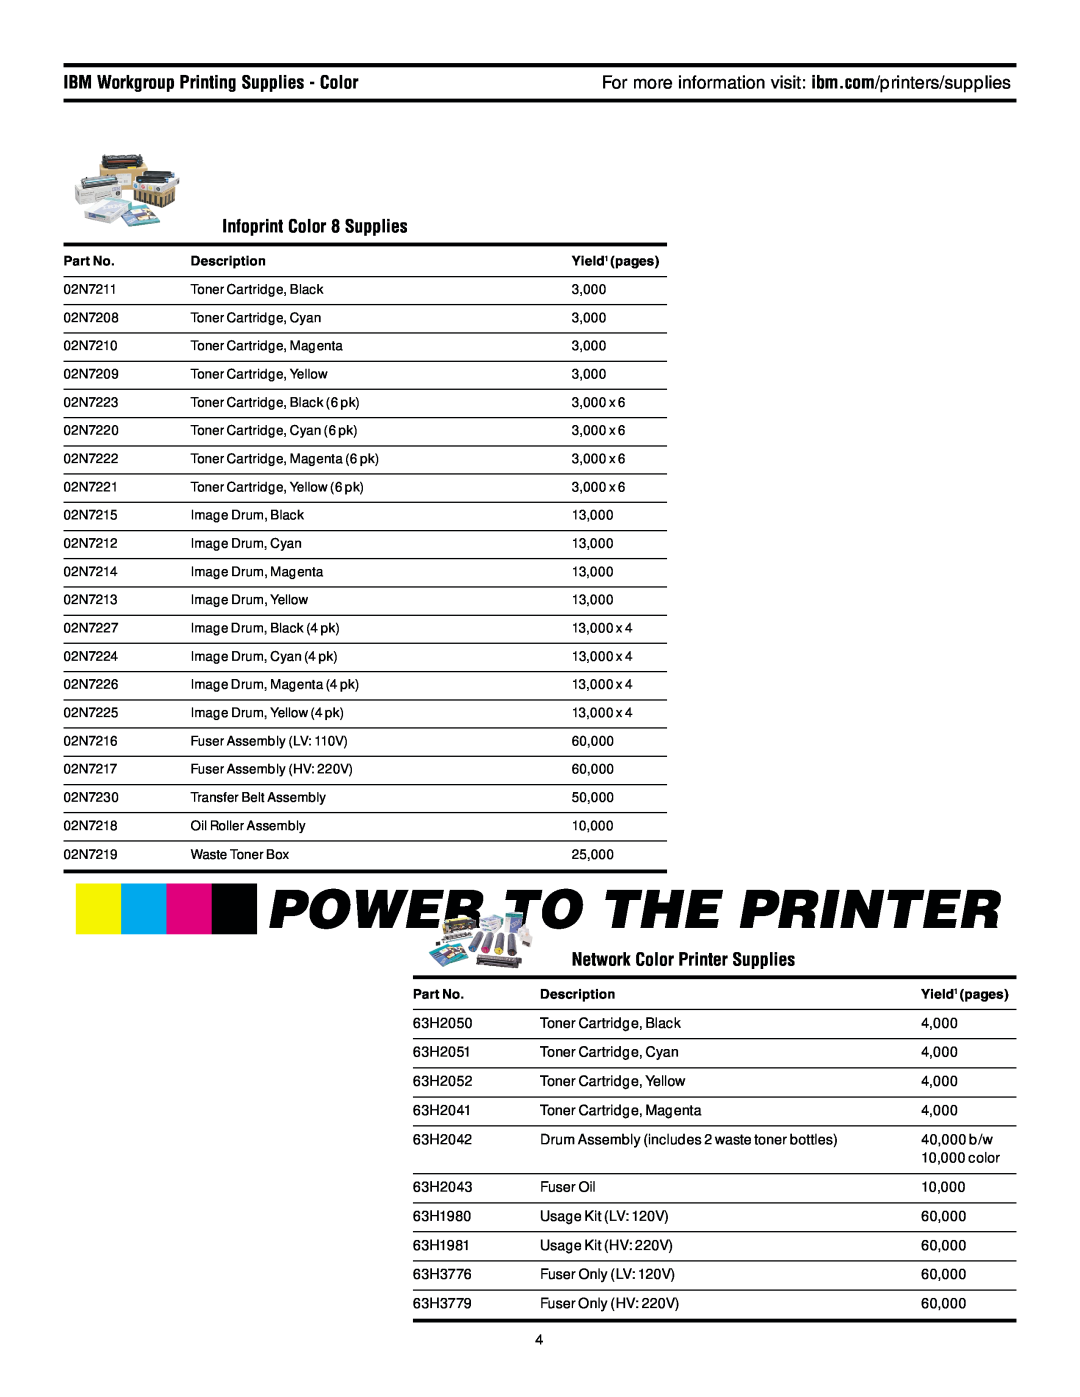 IBM 6400 manual Infoprint Color 8 Supplies, Network Color Printer Supplies, Power To The Printer 